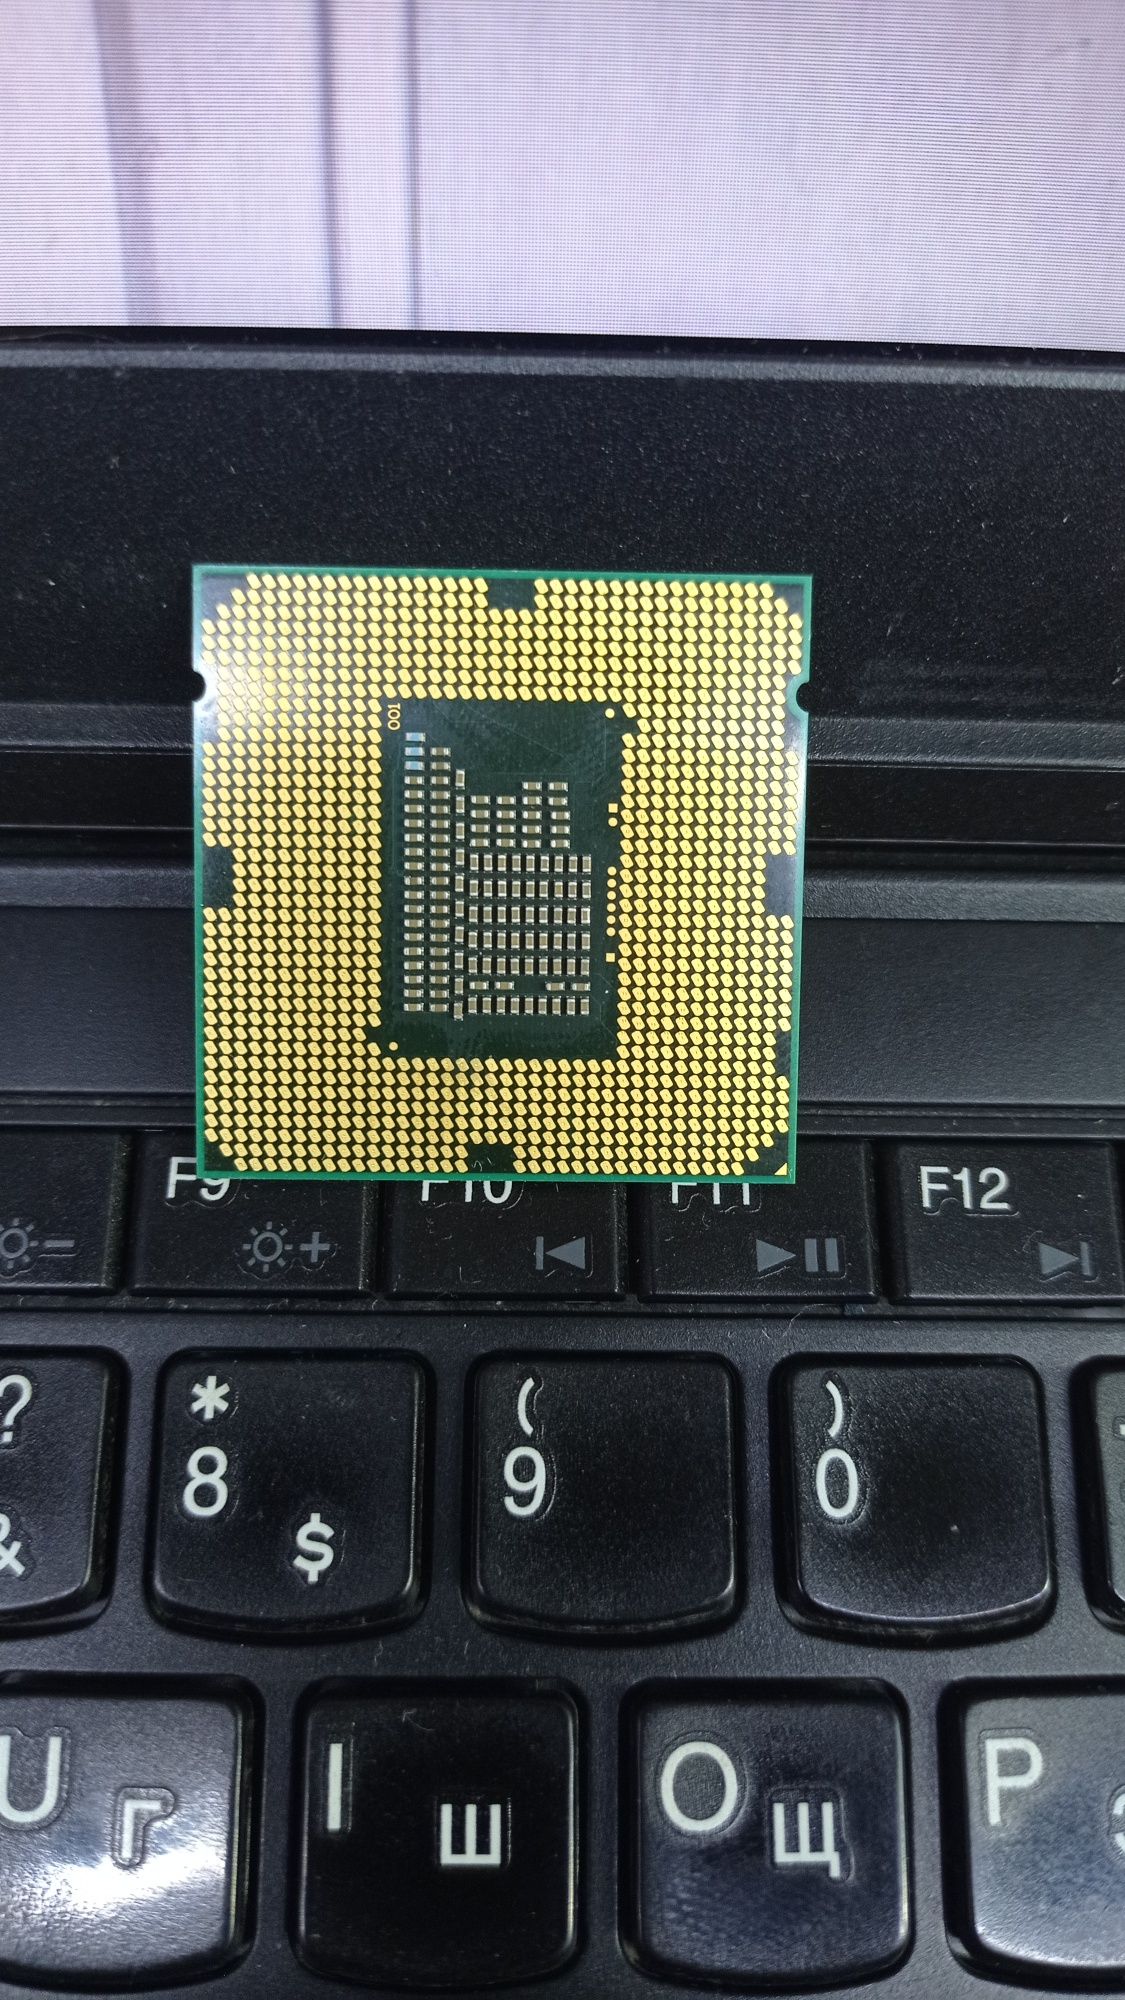 Процесор Intel Core i3-2120 3.3GHz/5GT/s/3MB  s1155